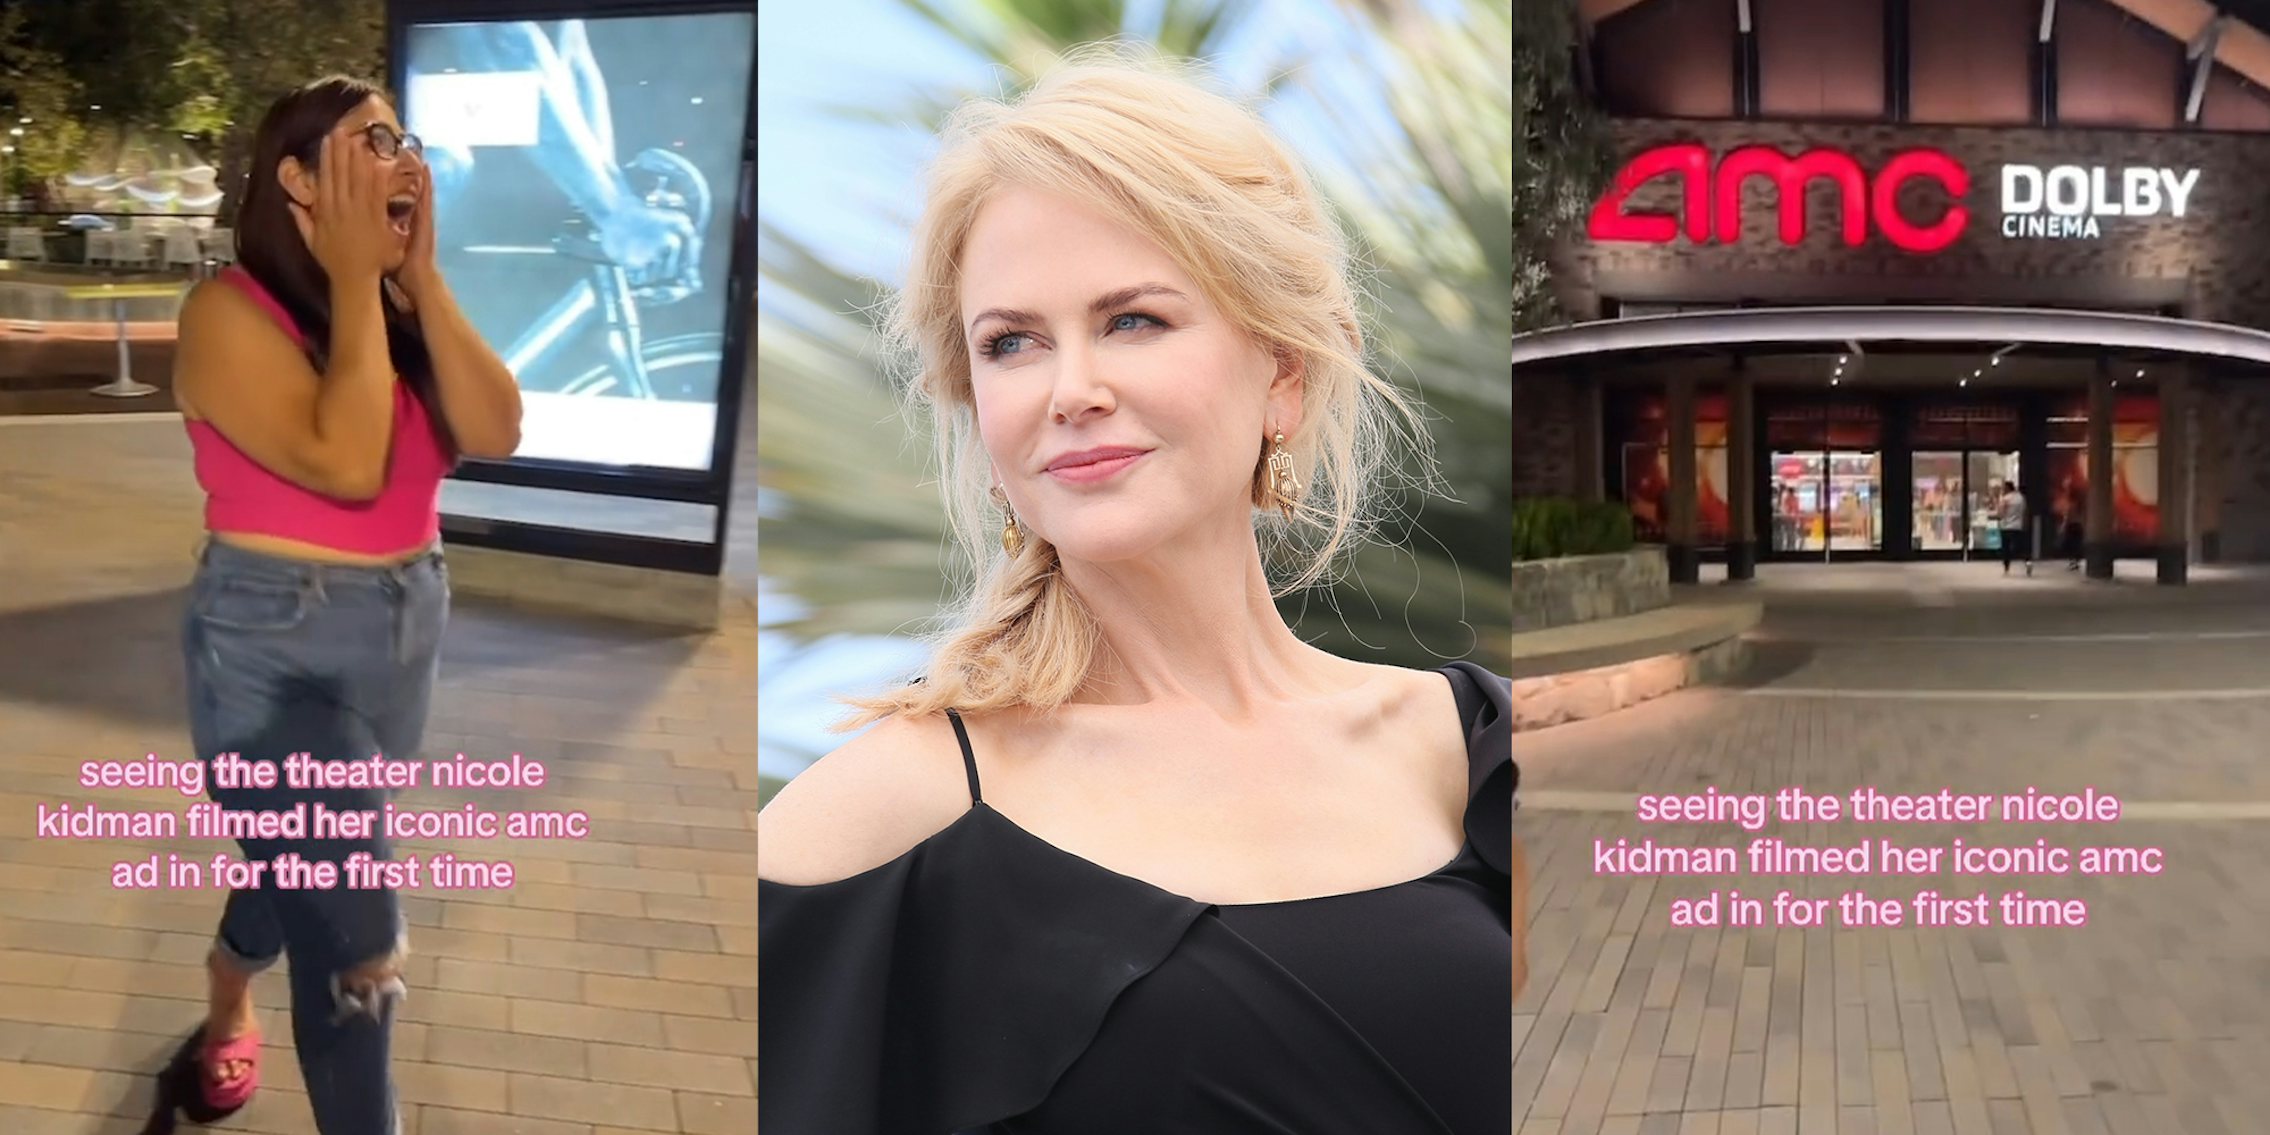 TikToker films herself seeing the AMC where they filmed the Nicole Kidman ad